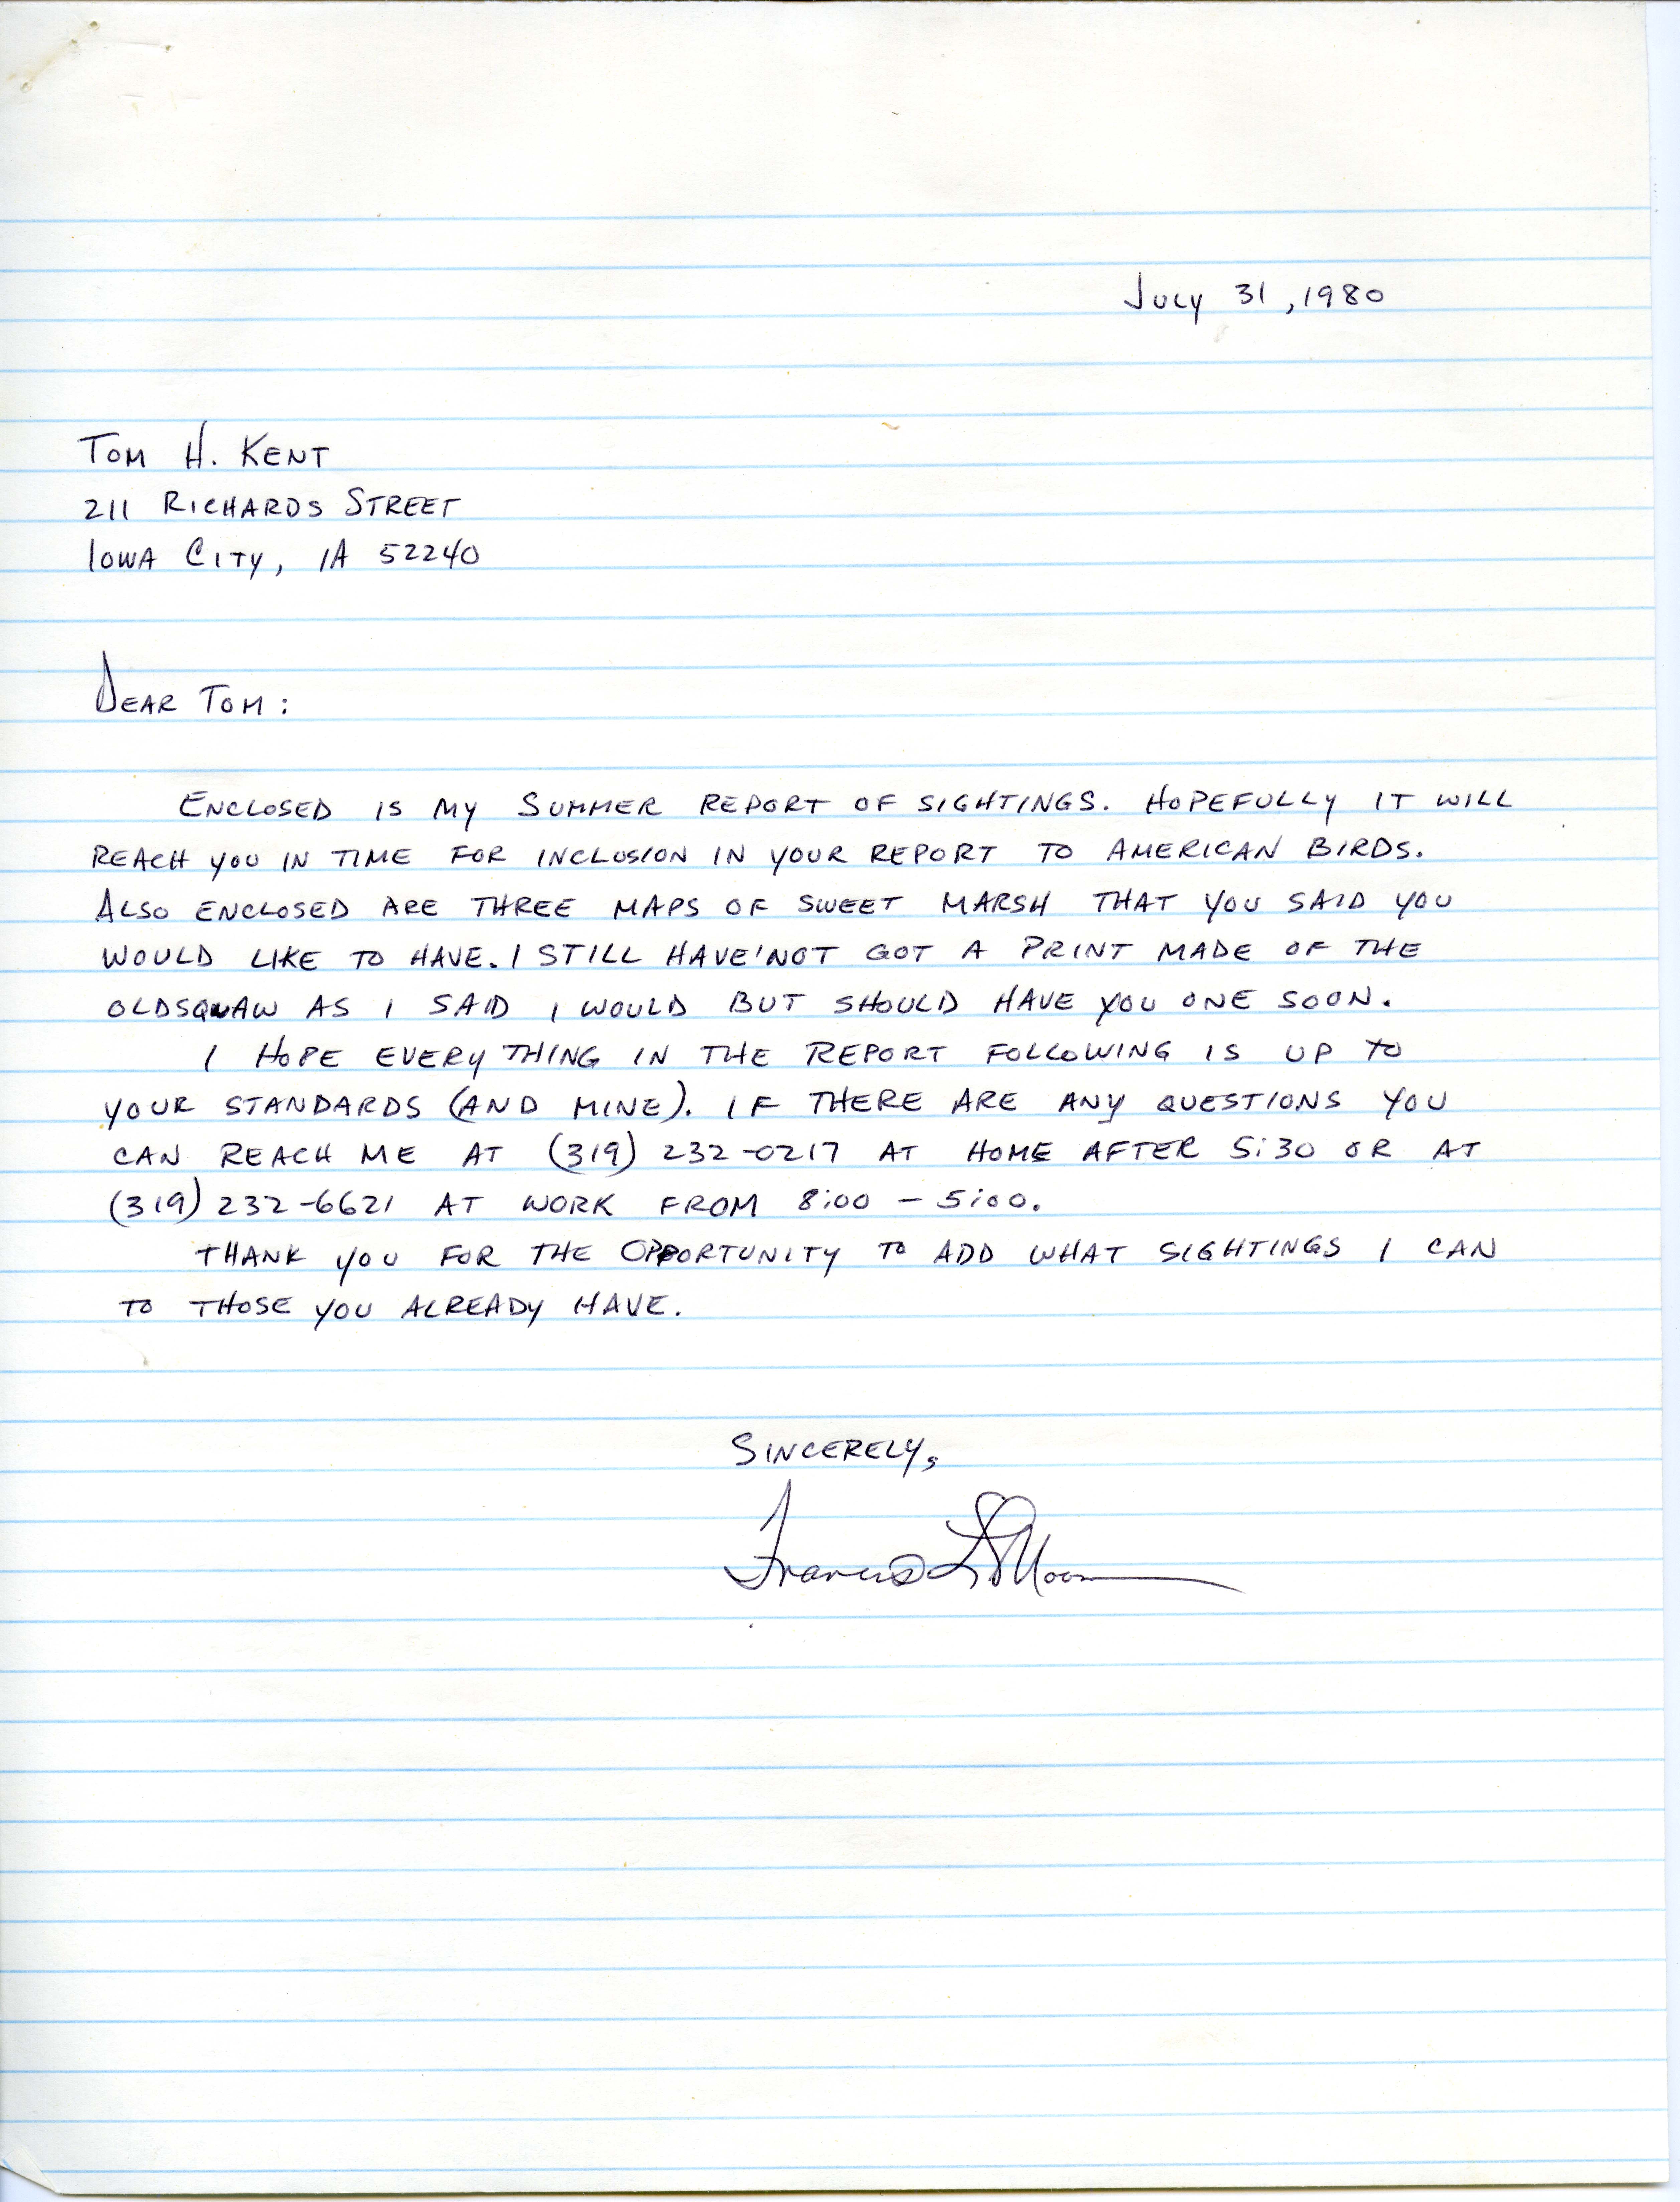 Francis L. Moore letter to Thomas H. Kent regarding bird sightings, July 31, 1980